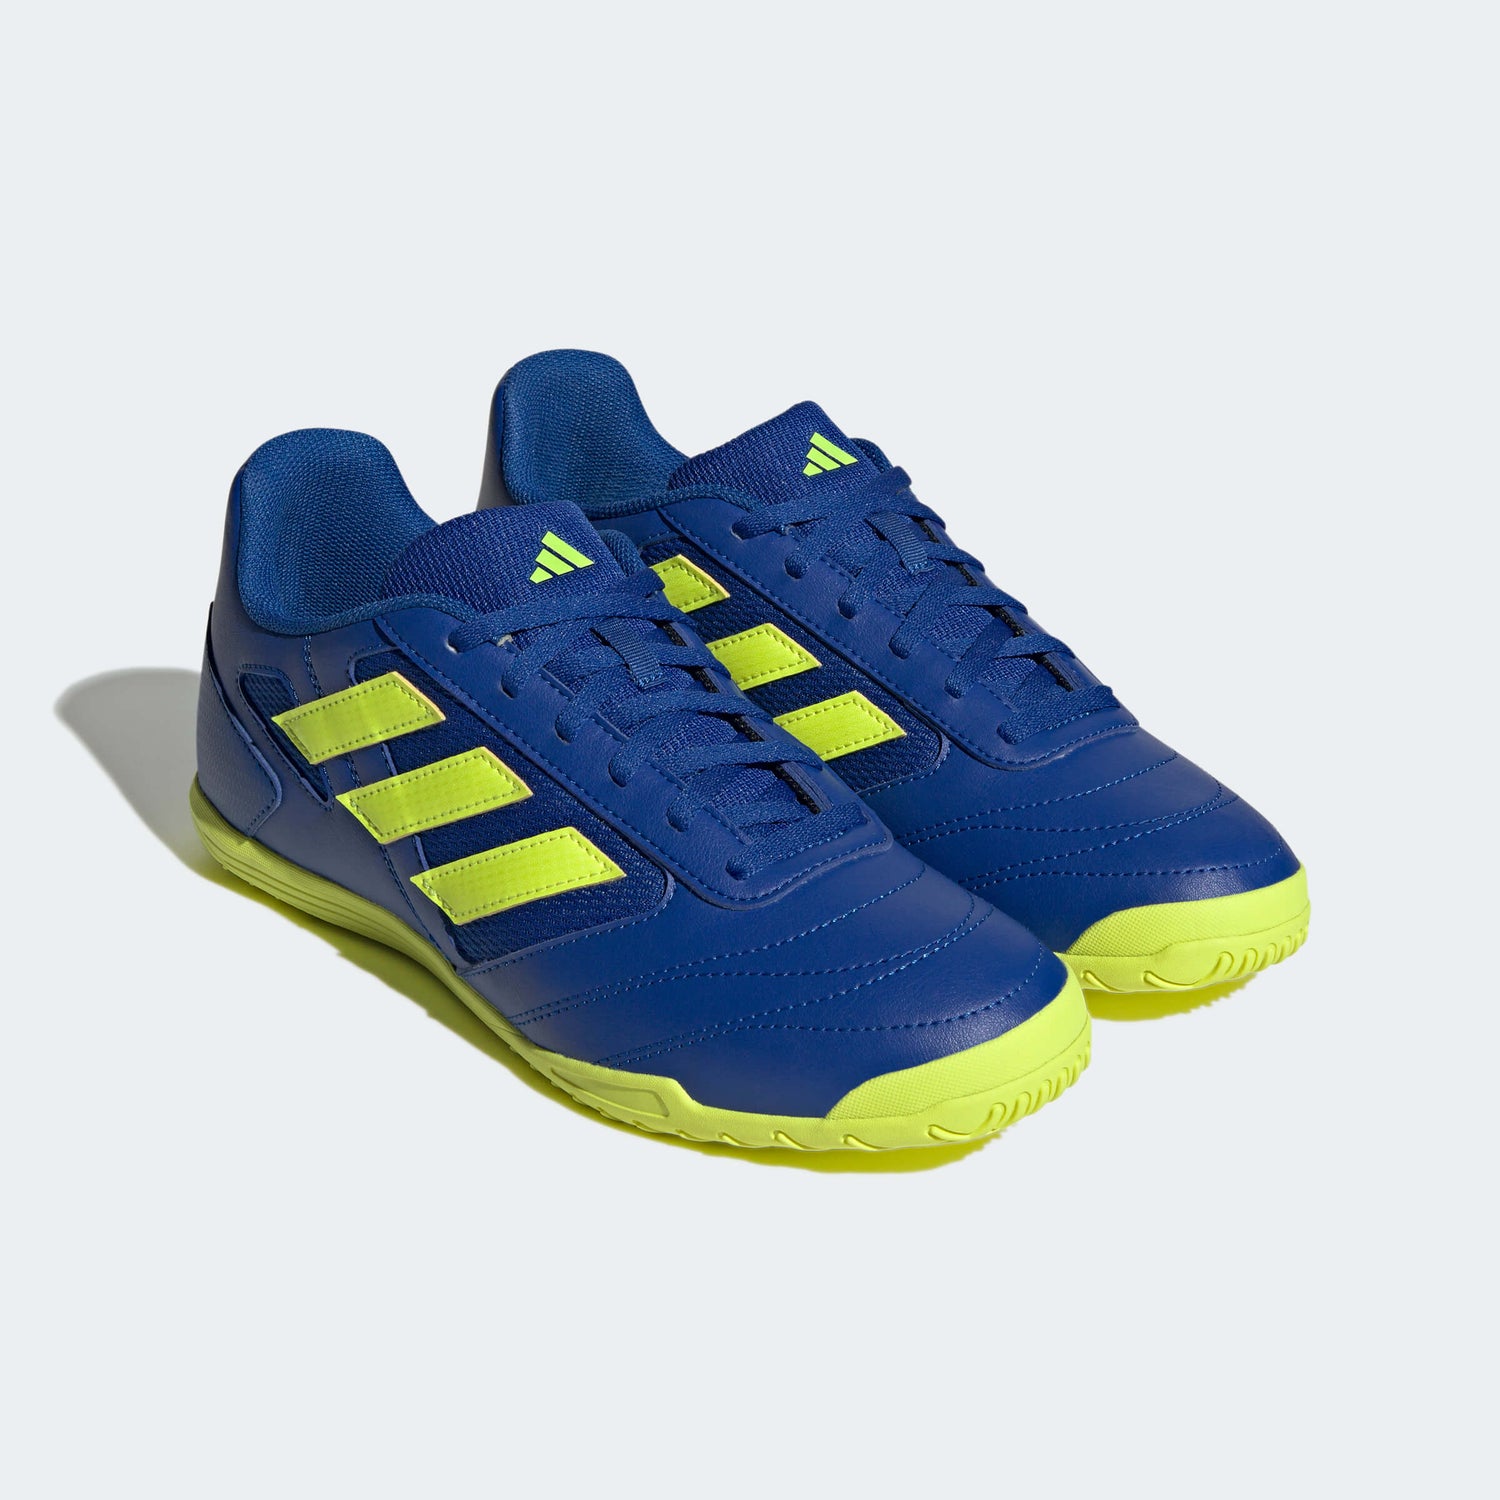 Adidas Super Sala 2 Indoor - Royal Blue - Solar Yellow (Pair - Front Lateral)